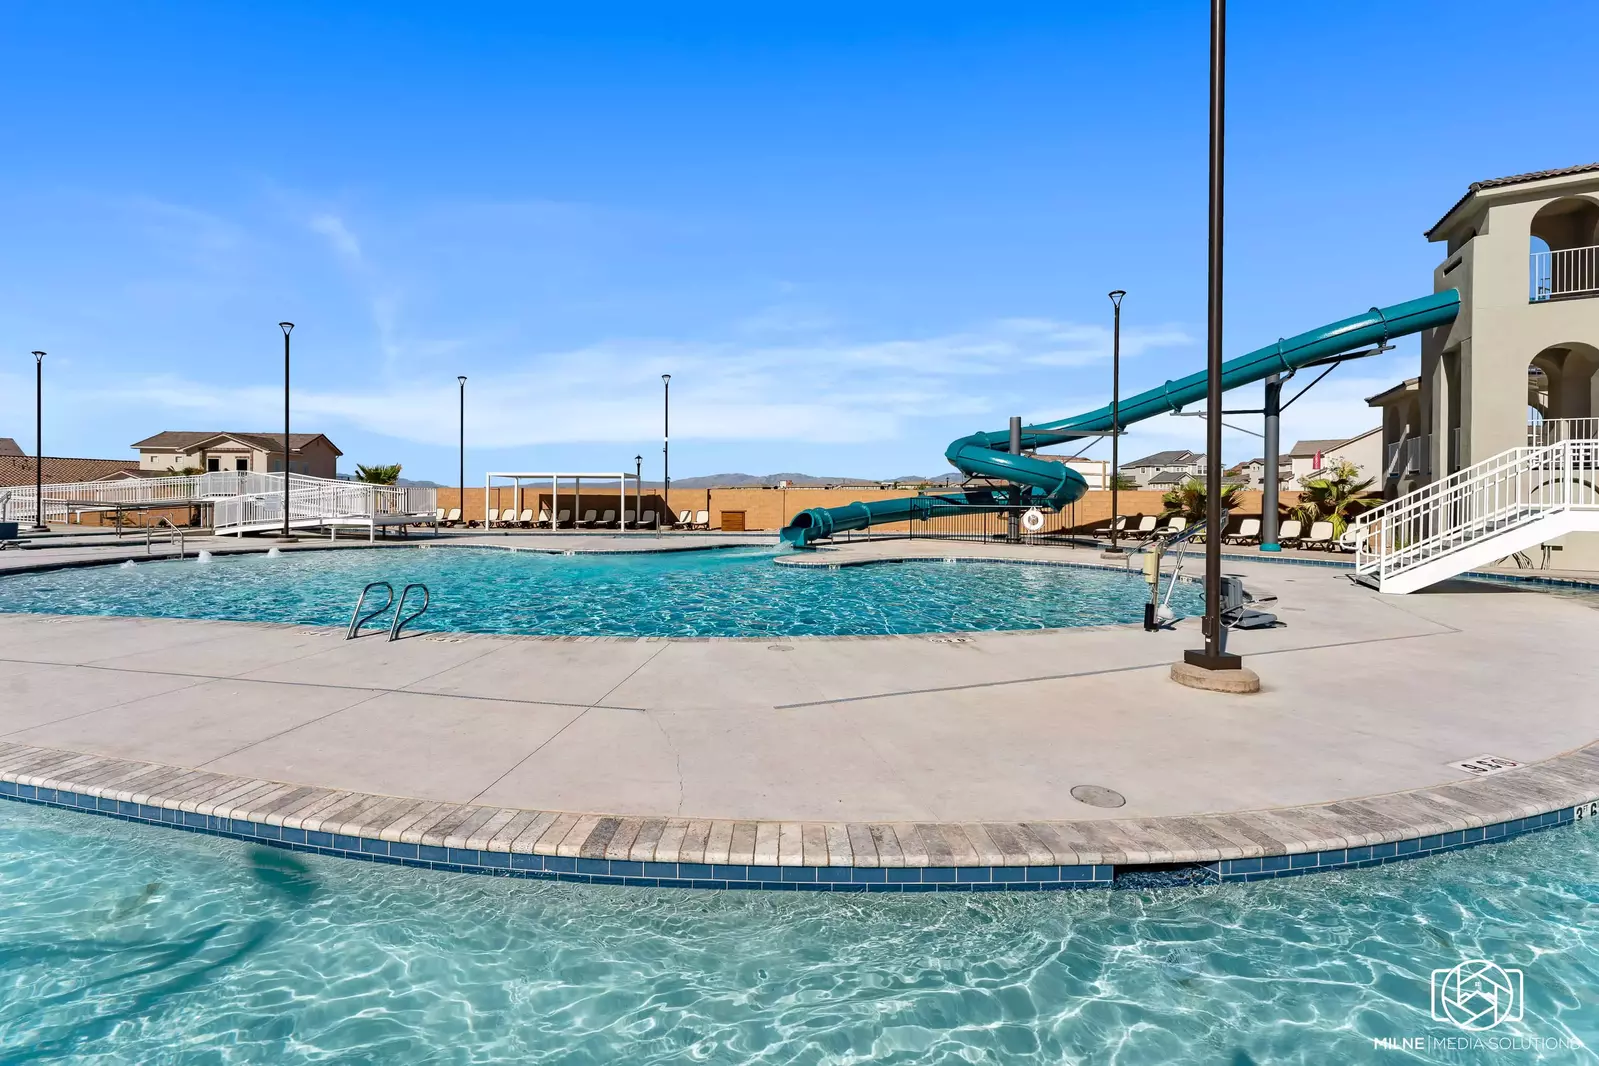 Community Pool, Slide, Splash Pad, Lazy River